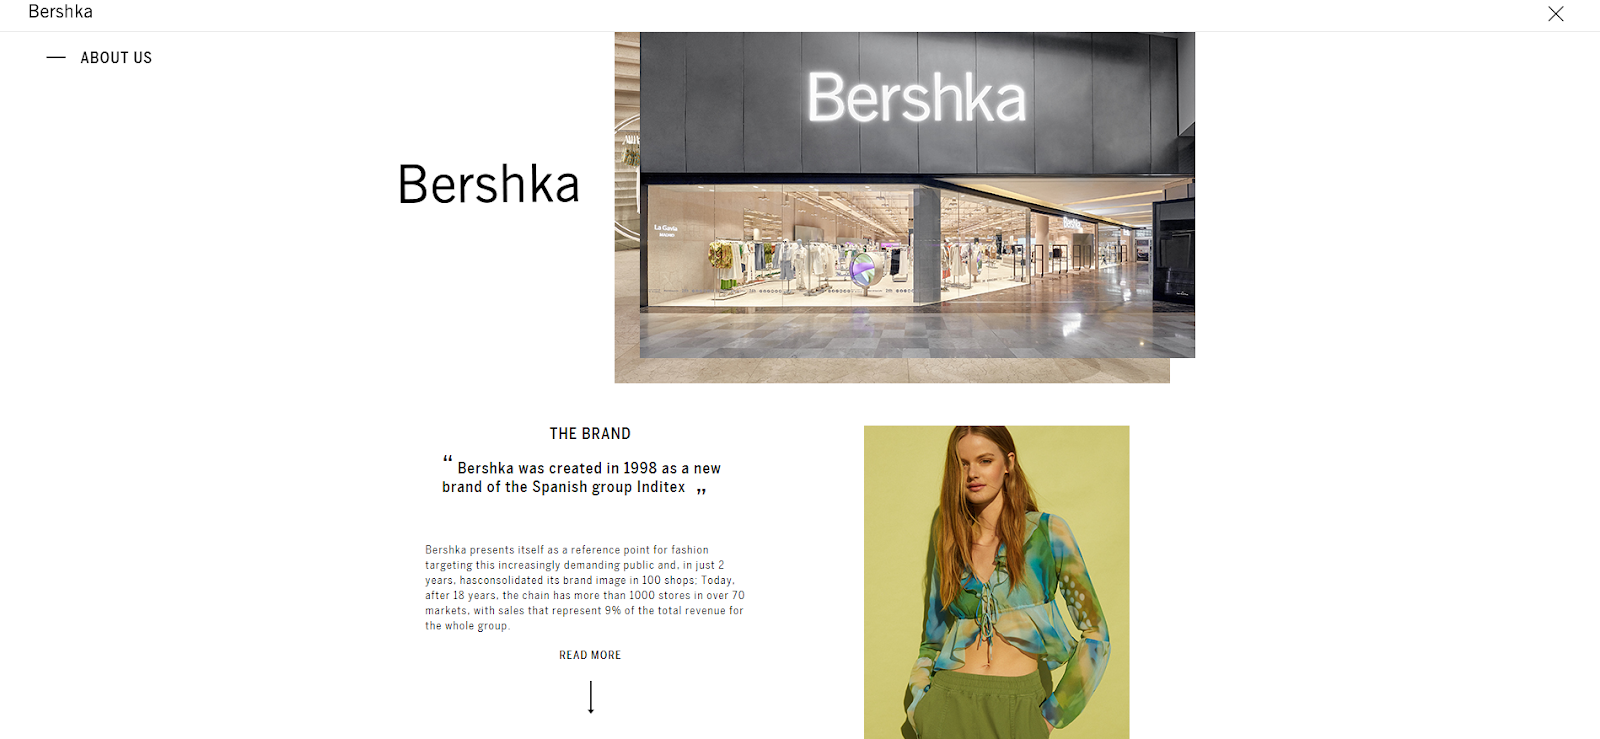 Bershka: Why You Should Buy Clothing At Bershka - CloudRetouch